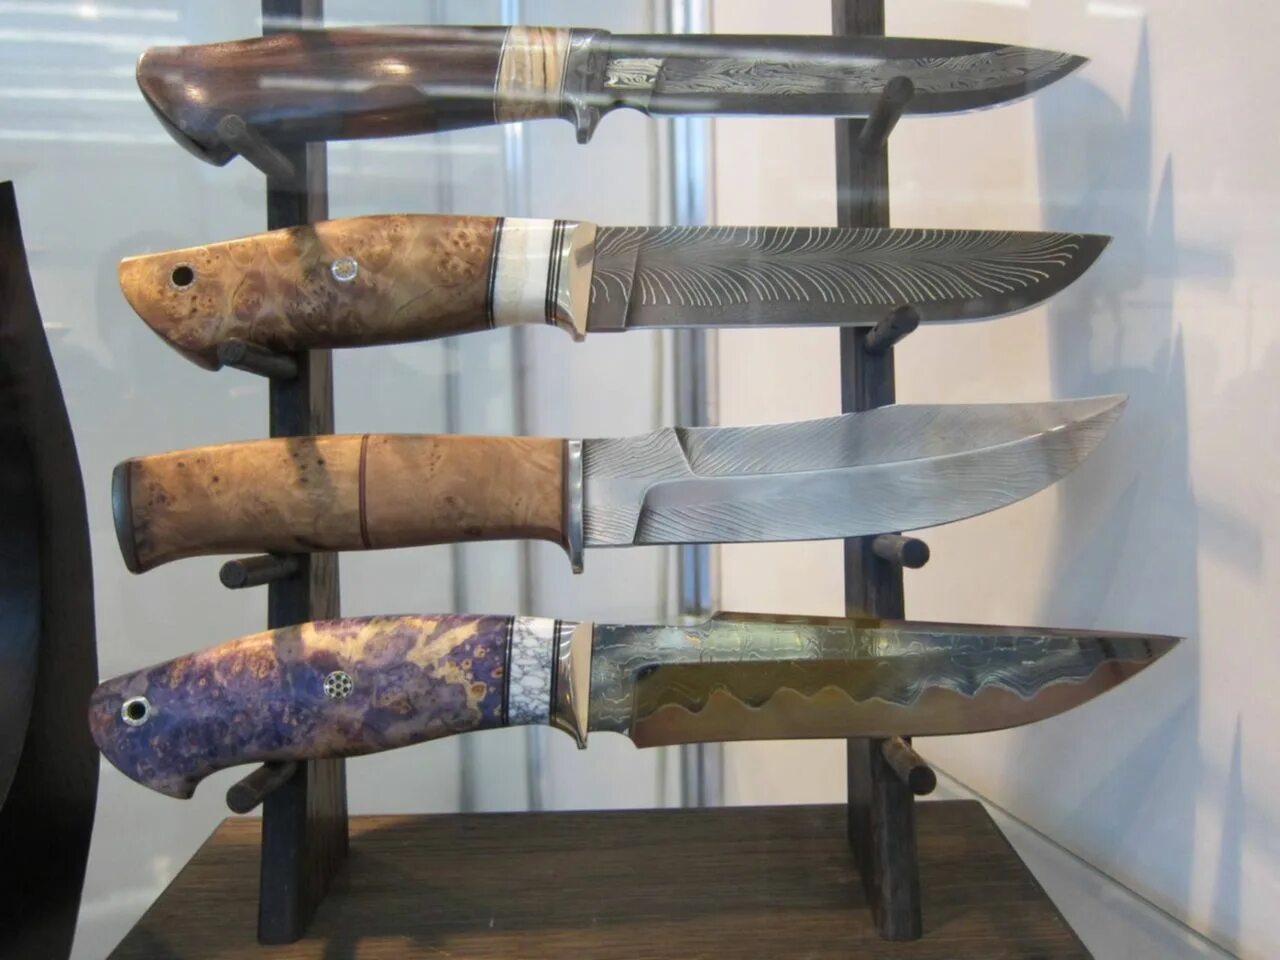 Ножевая выставка. Выставка ножей. Ножевые выставки. Выставка ножей в Москве. Московская ножевая выставка.